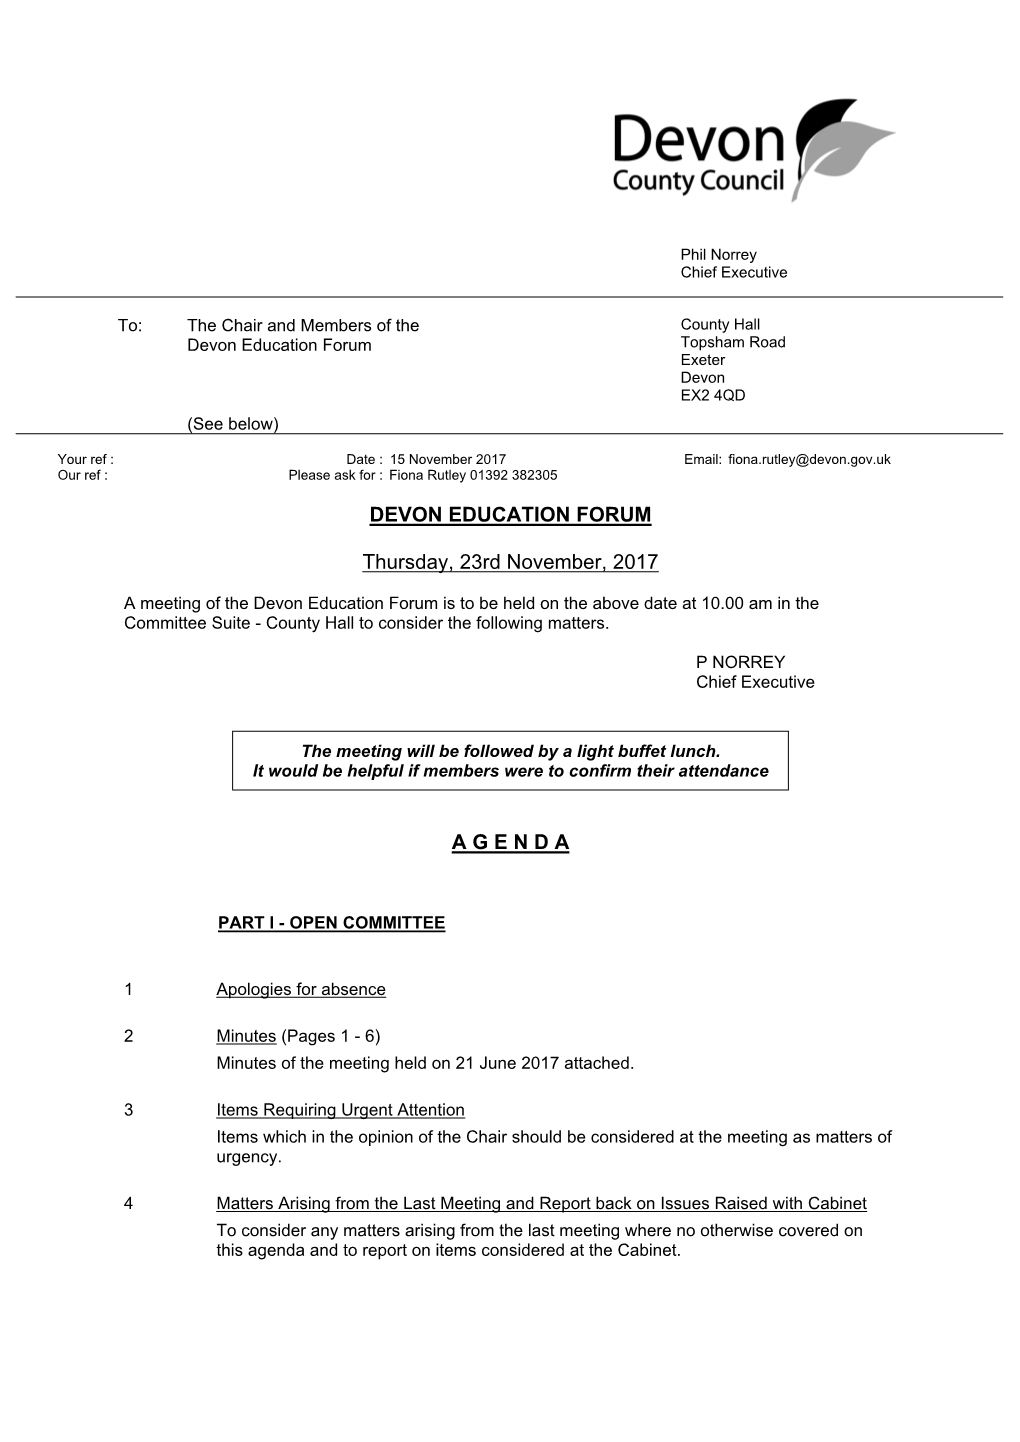 (Public Pack)Agenda Document for Devon Education Forum, 23/11